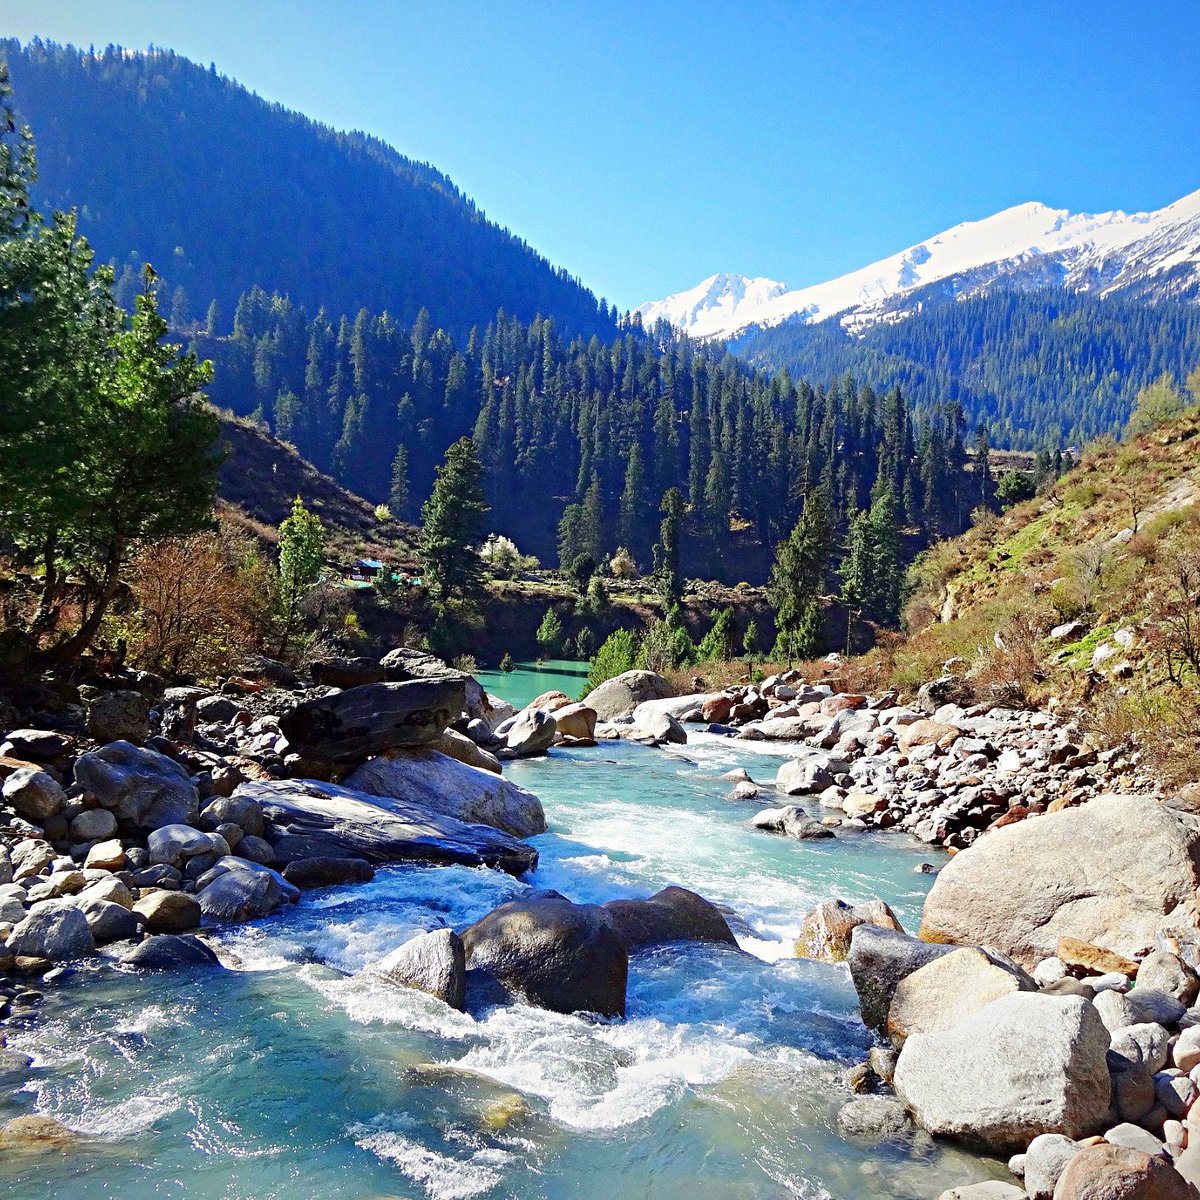 Kheerganga Trek: A spiritual Retreat amidst the Himalayan Wilderness